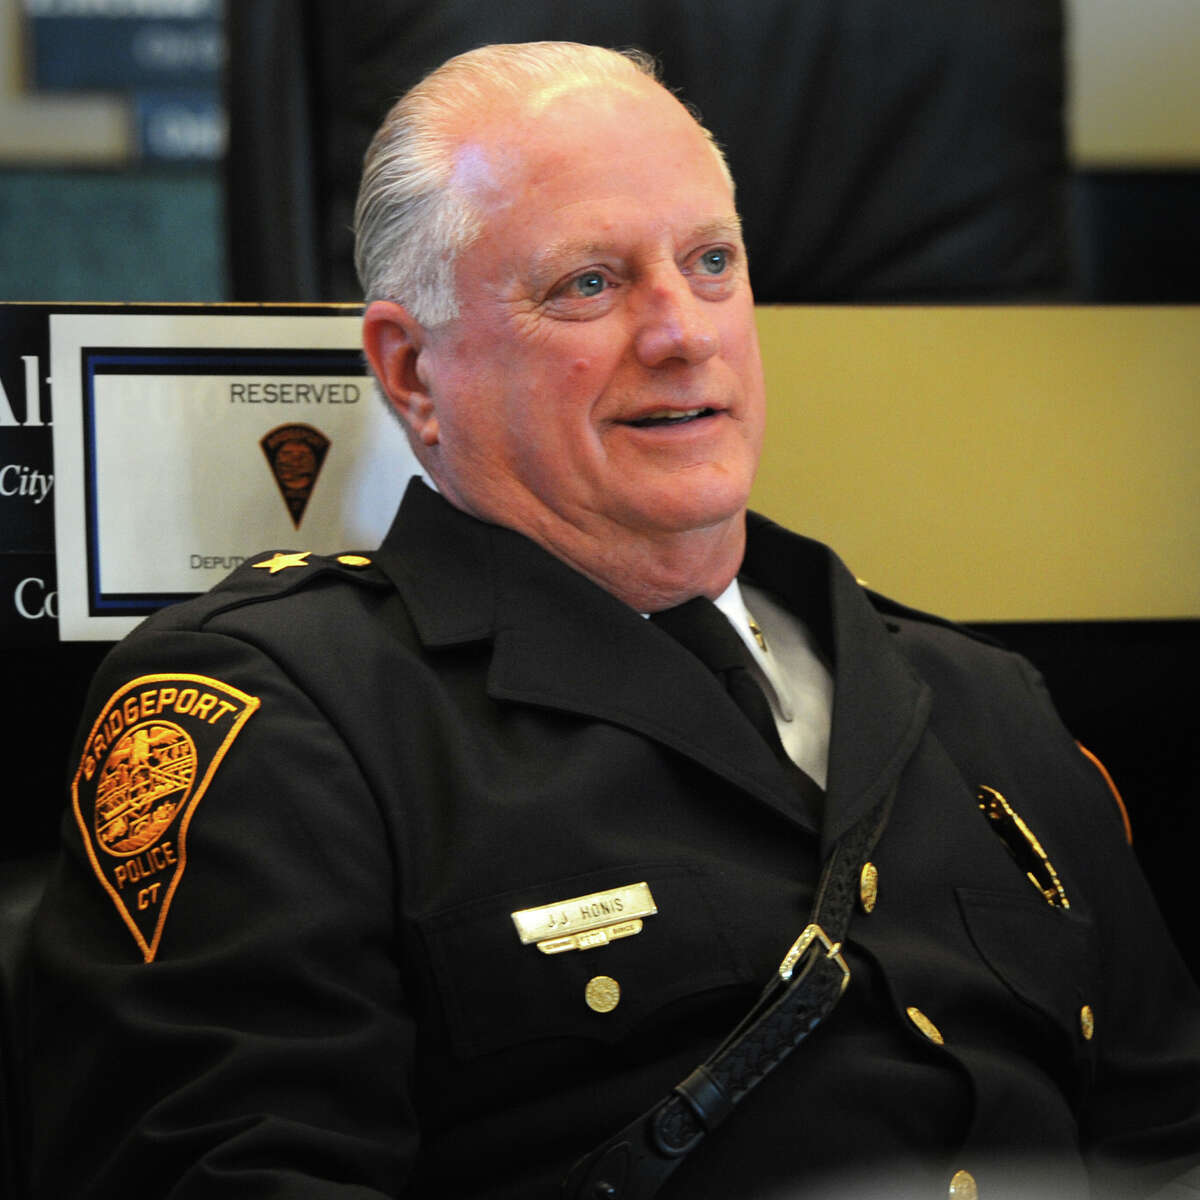 1. Former Police Department Deputy Chief James Honis Gross earnings: $513,709